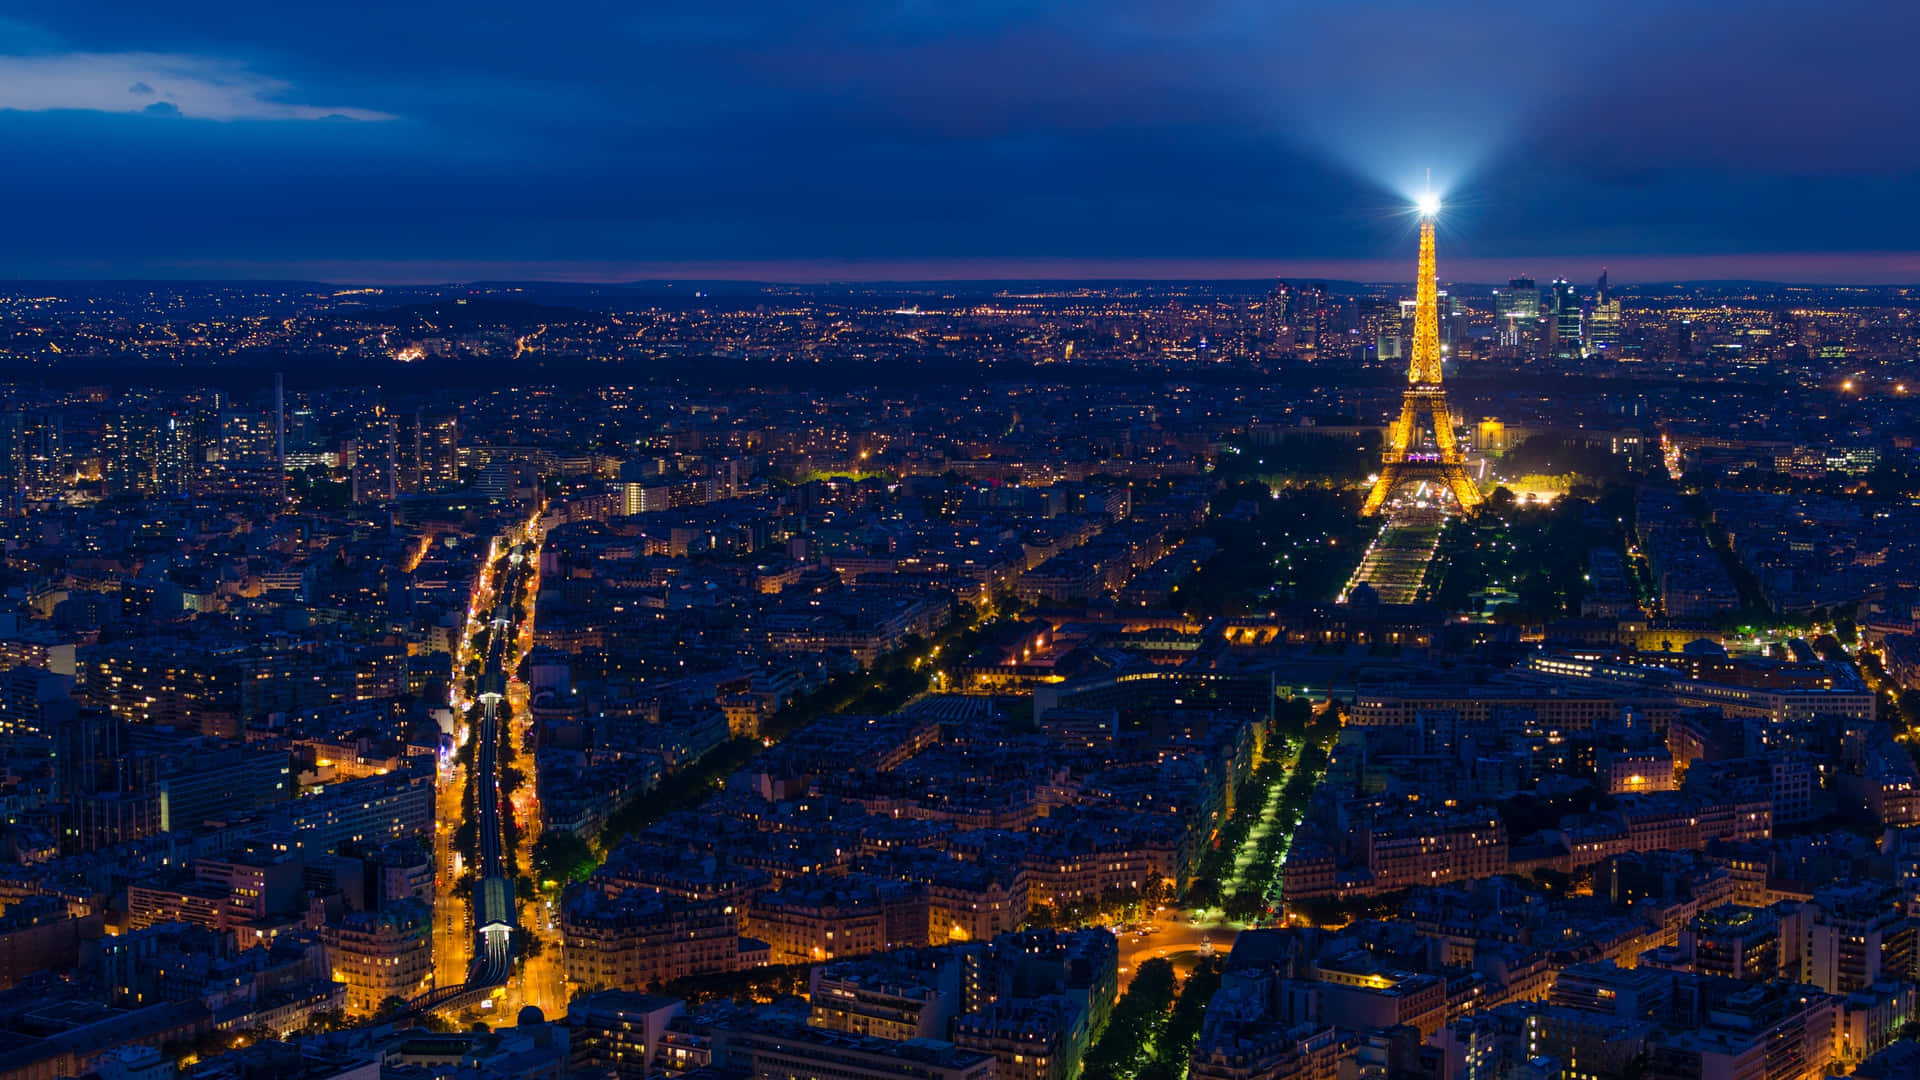 A Romantic View Of Paris At Night